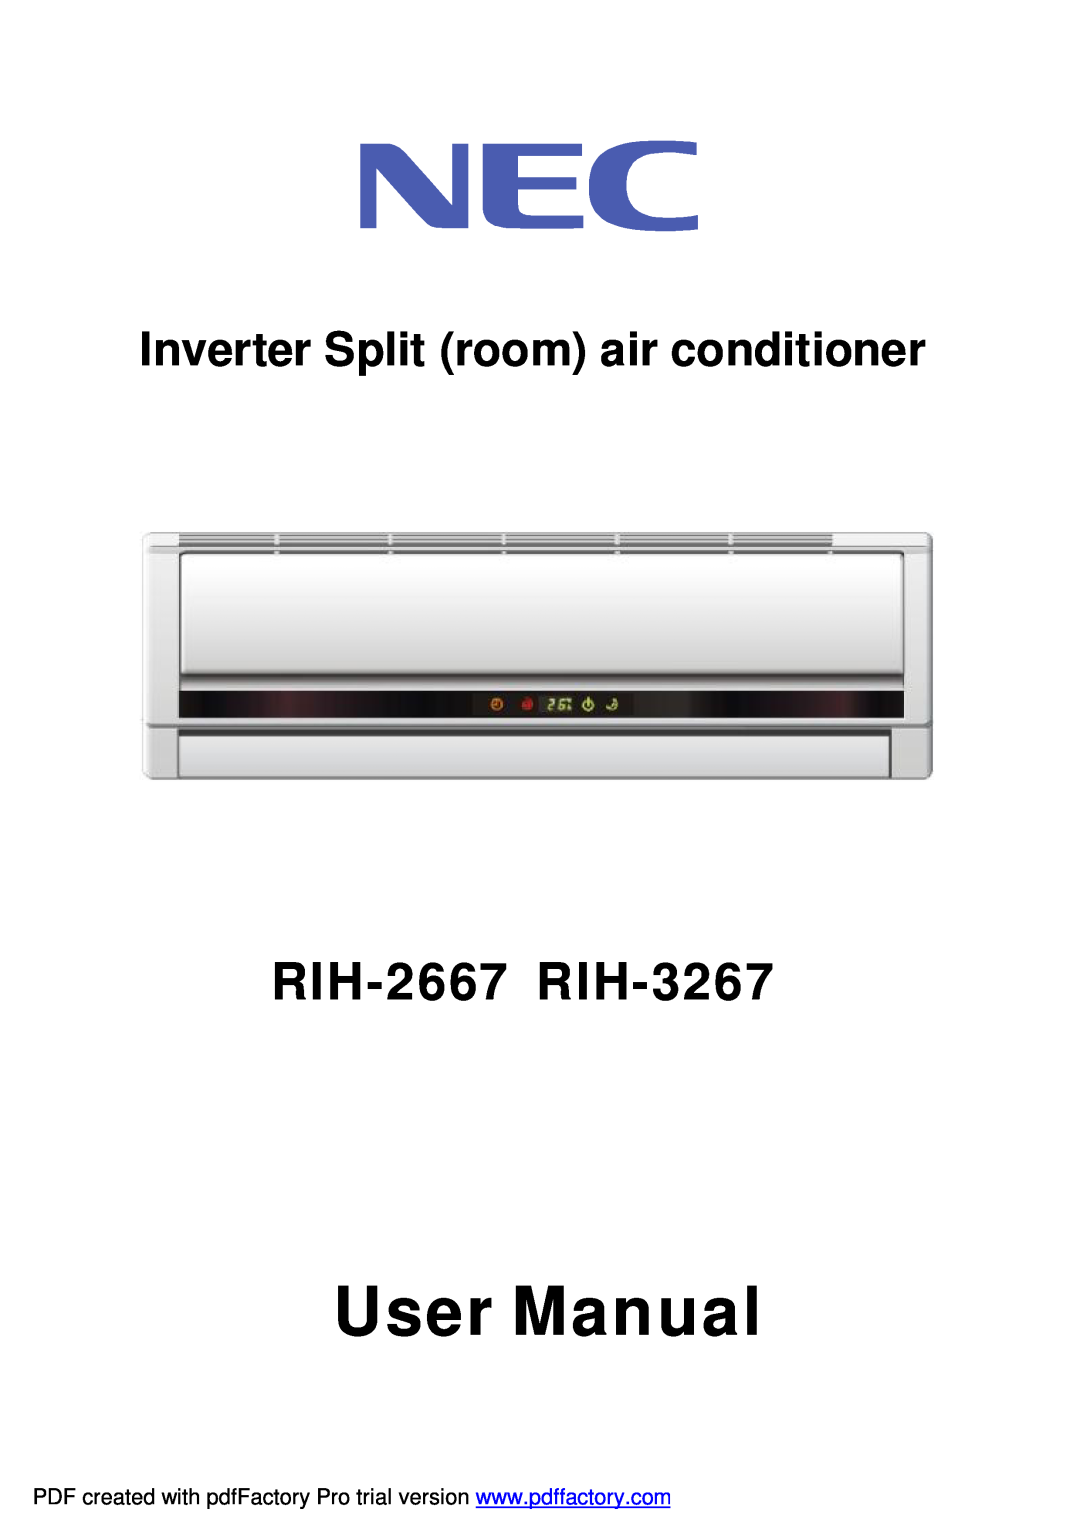 NEC user manual Inverter Split room air conditioner, RIH-2667 RIH-3267 